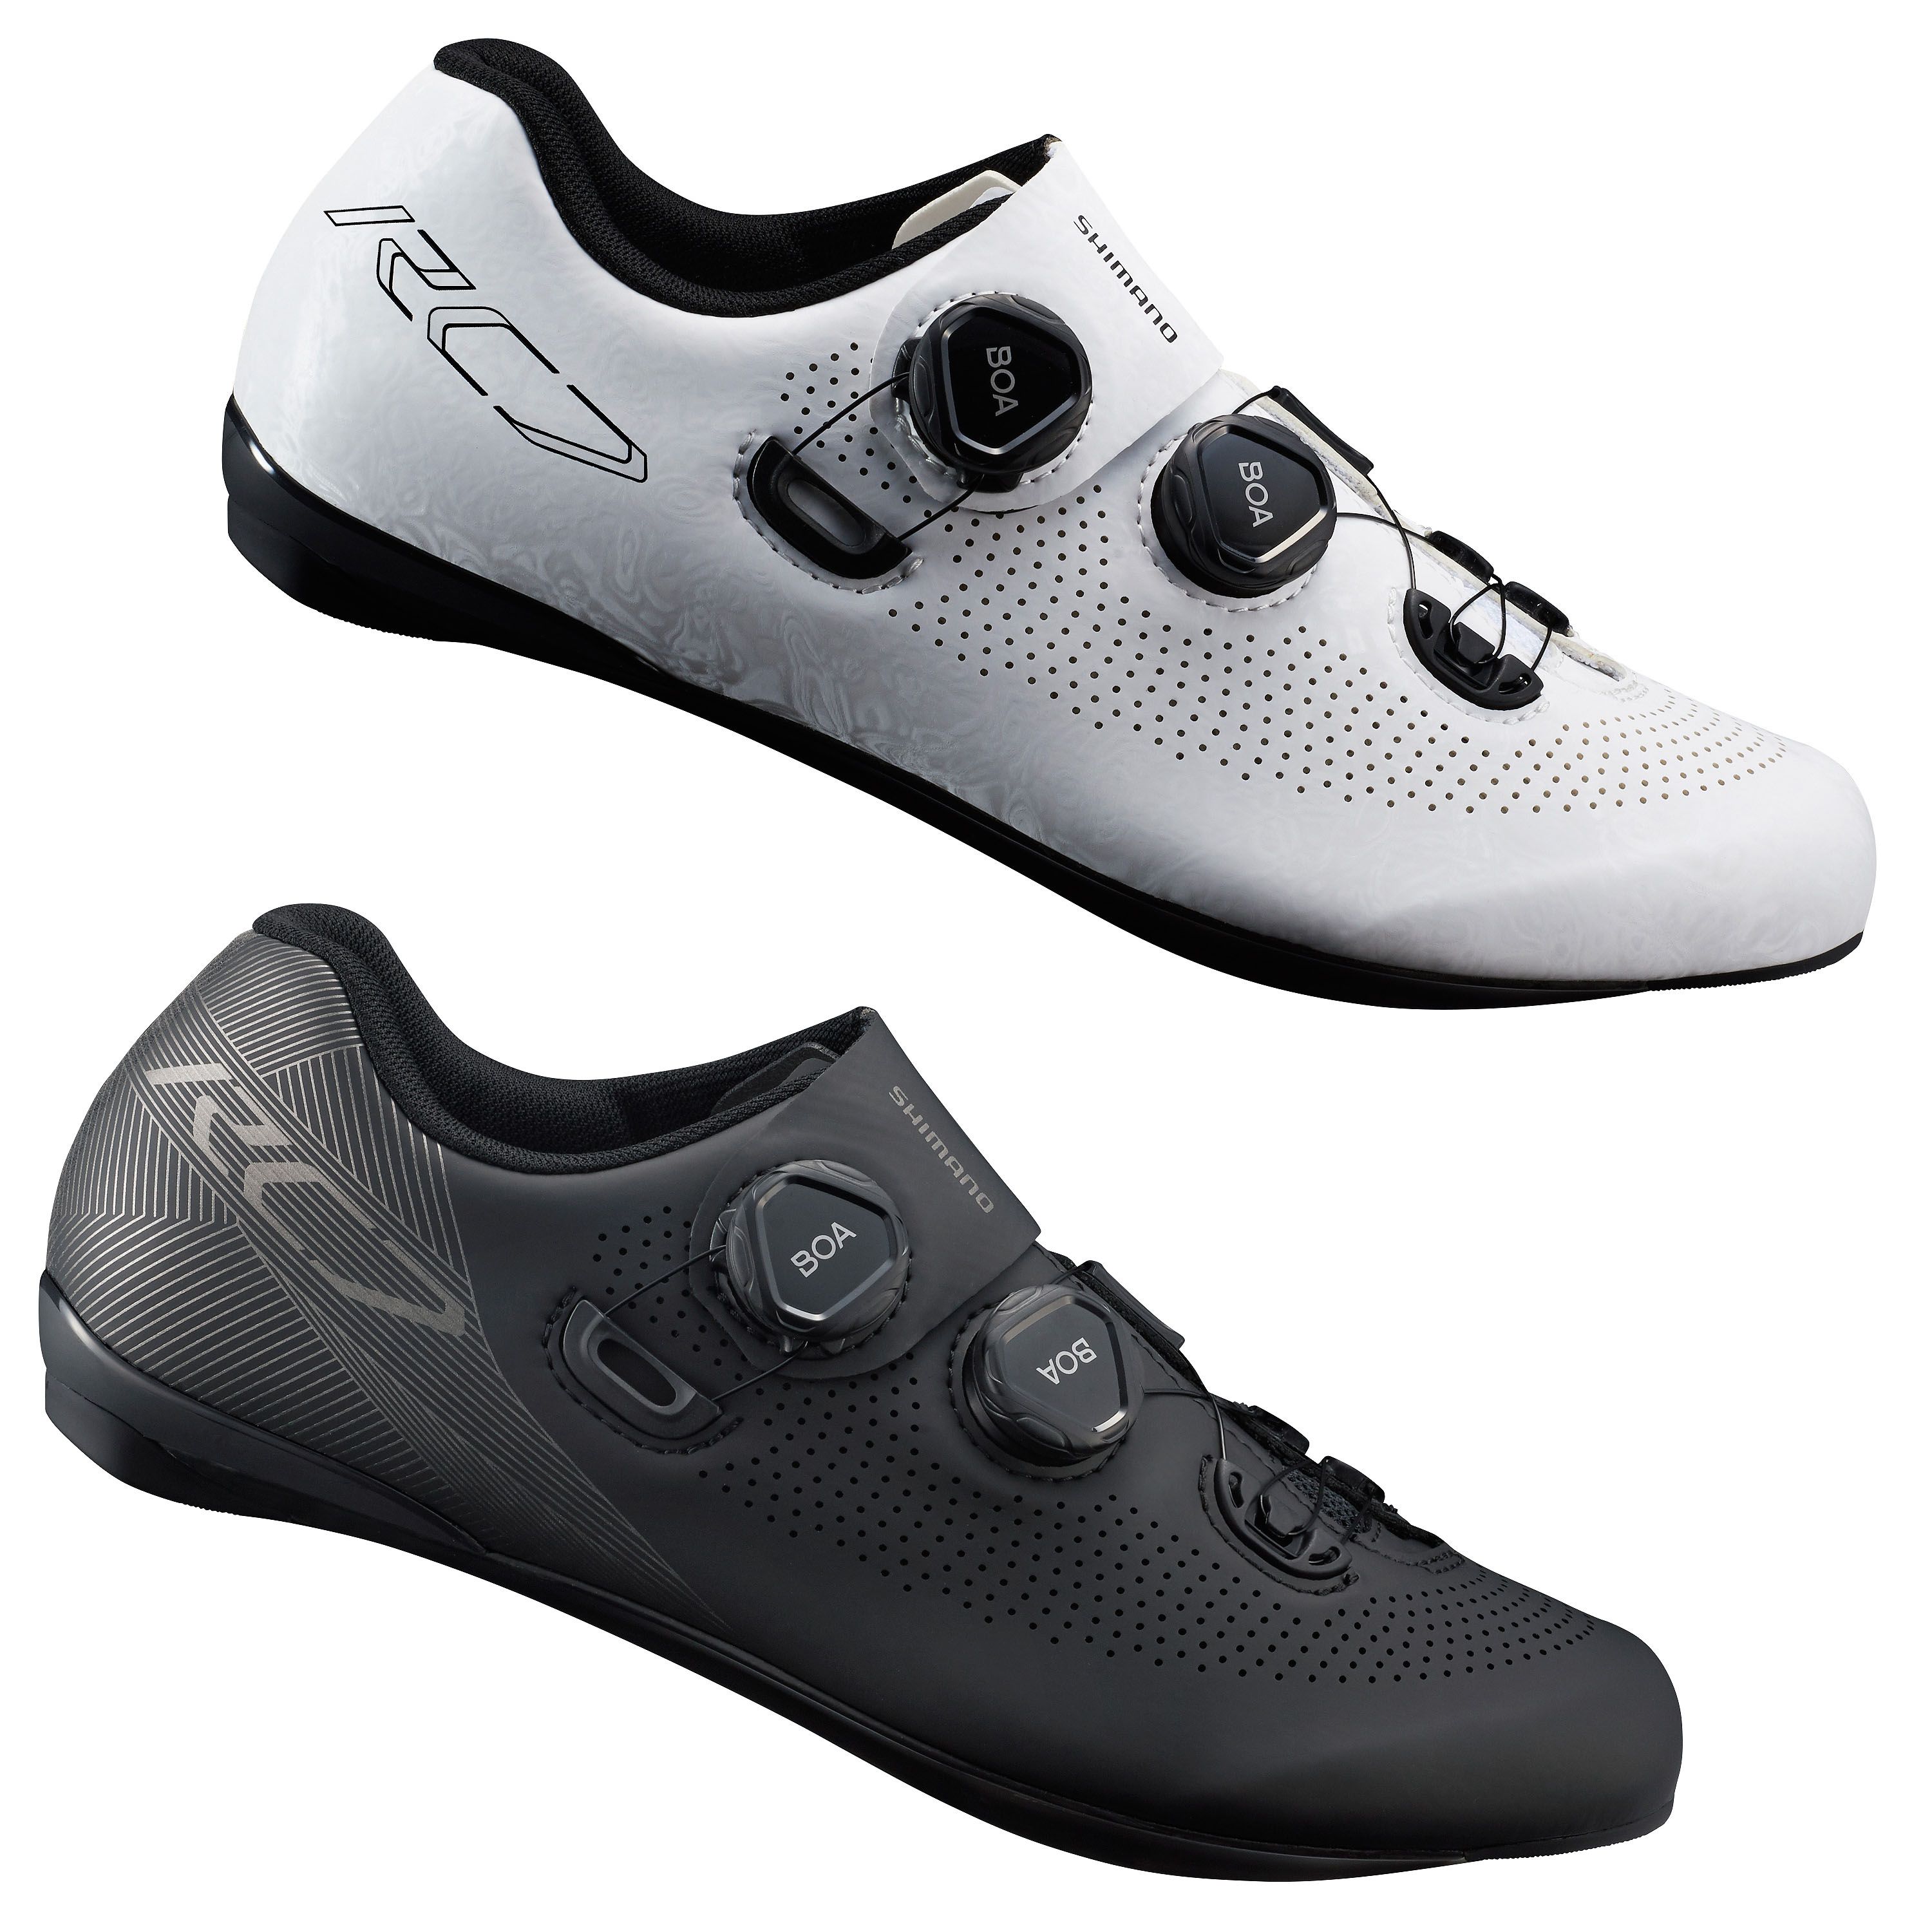 Shimano Rc7 SPD-SL Road Cycling Shoes 